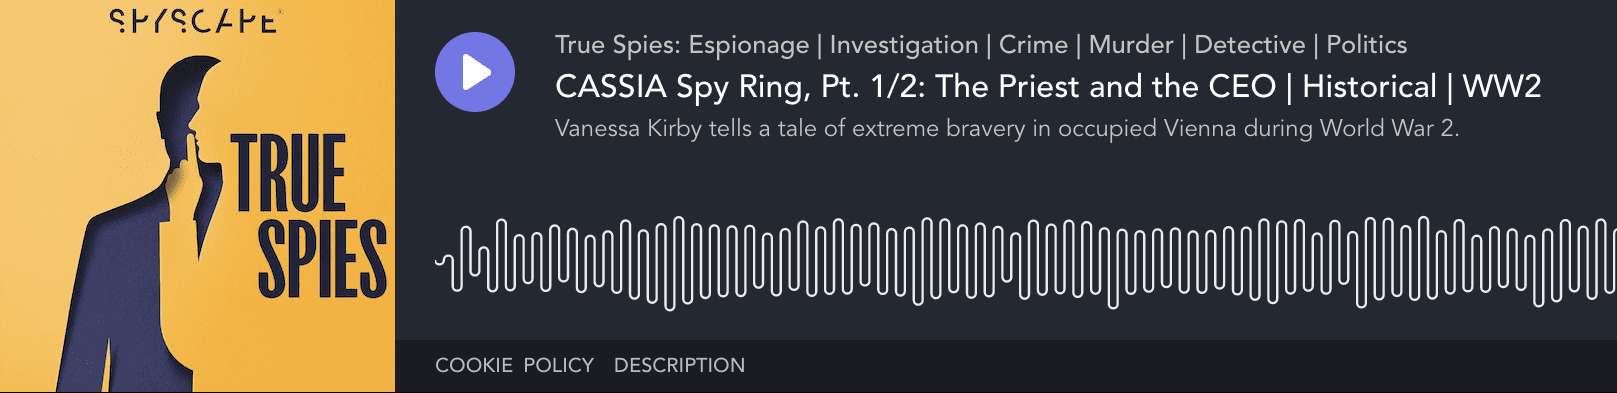 Cassia Spy Ring podcast